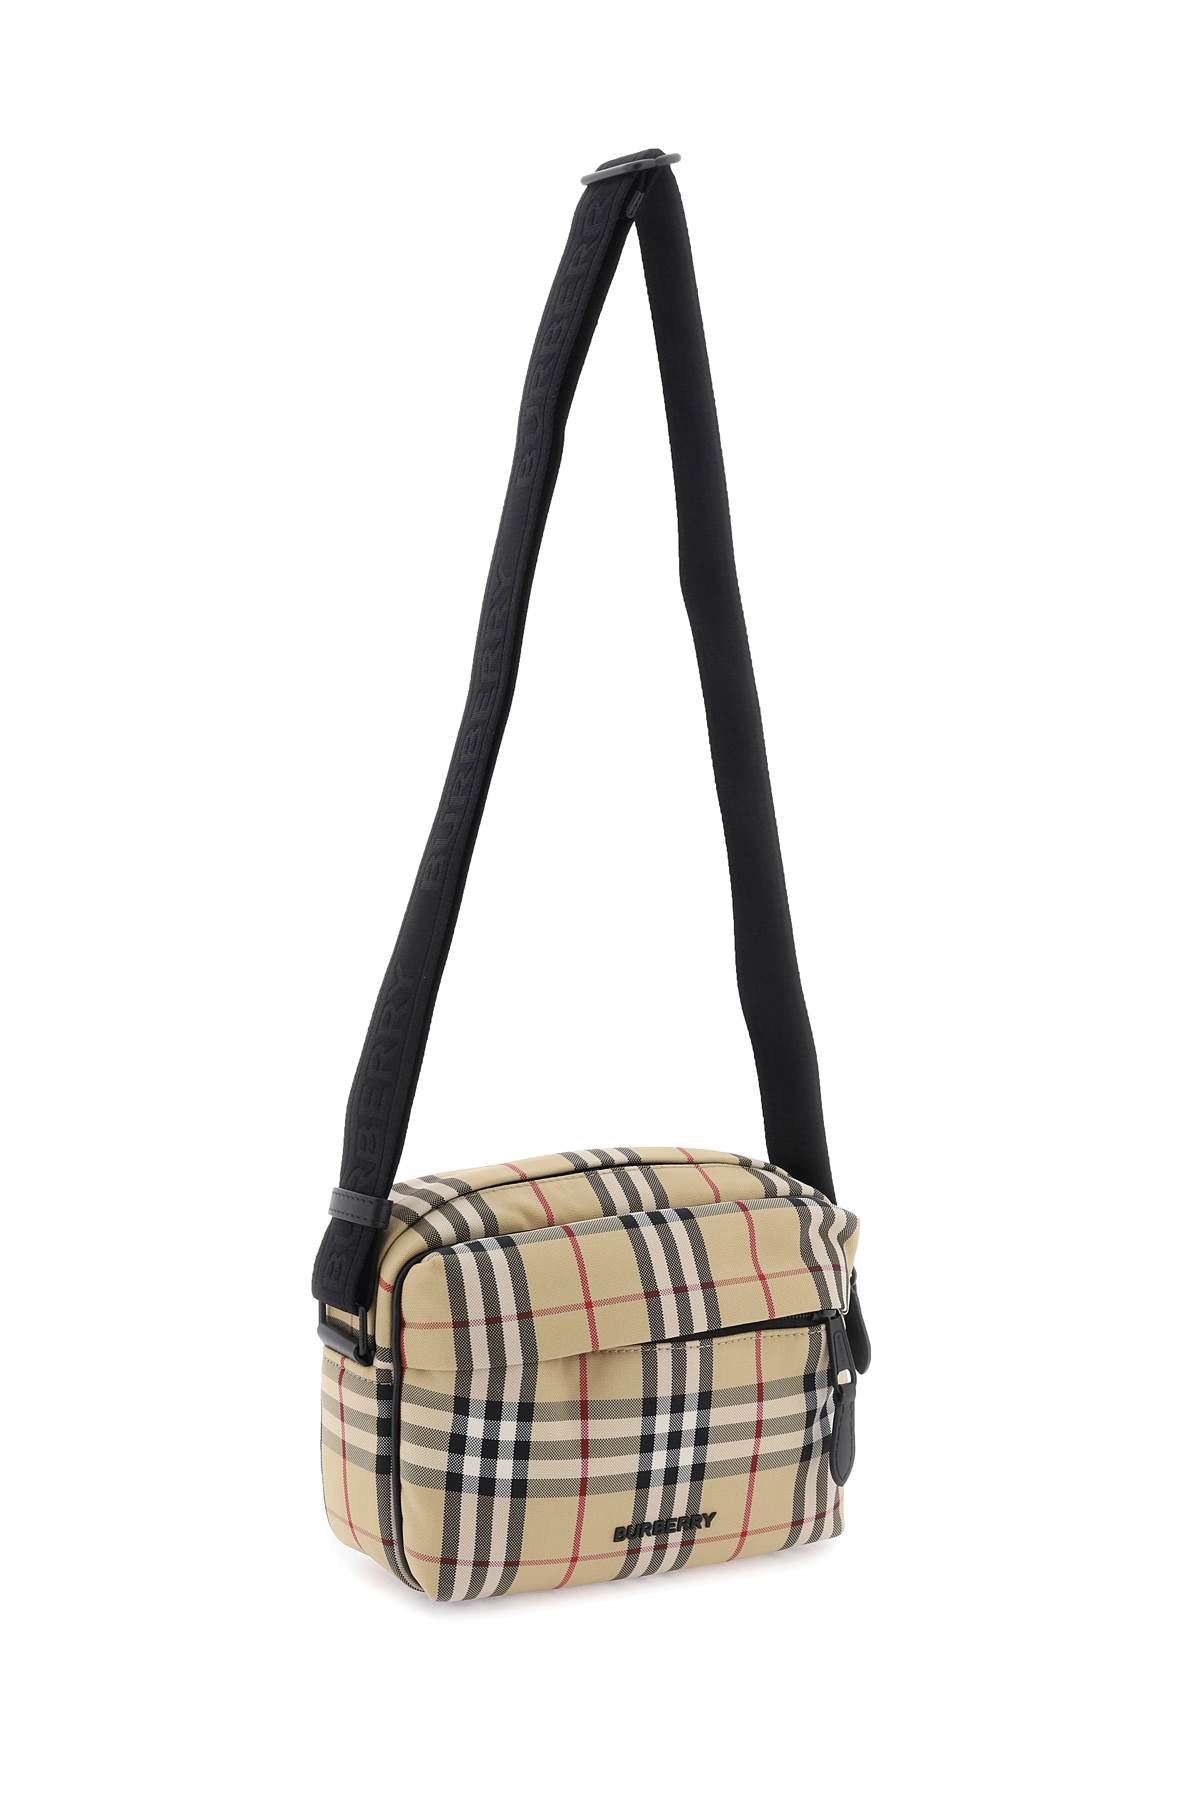 Burberry Iconic Check Nylon Paddy Crossbody Handbag for Women